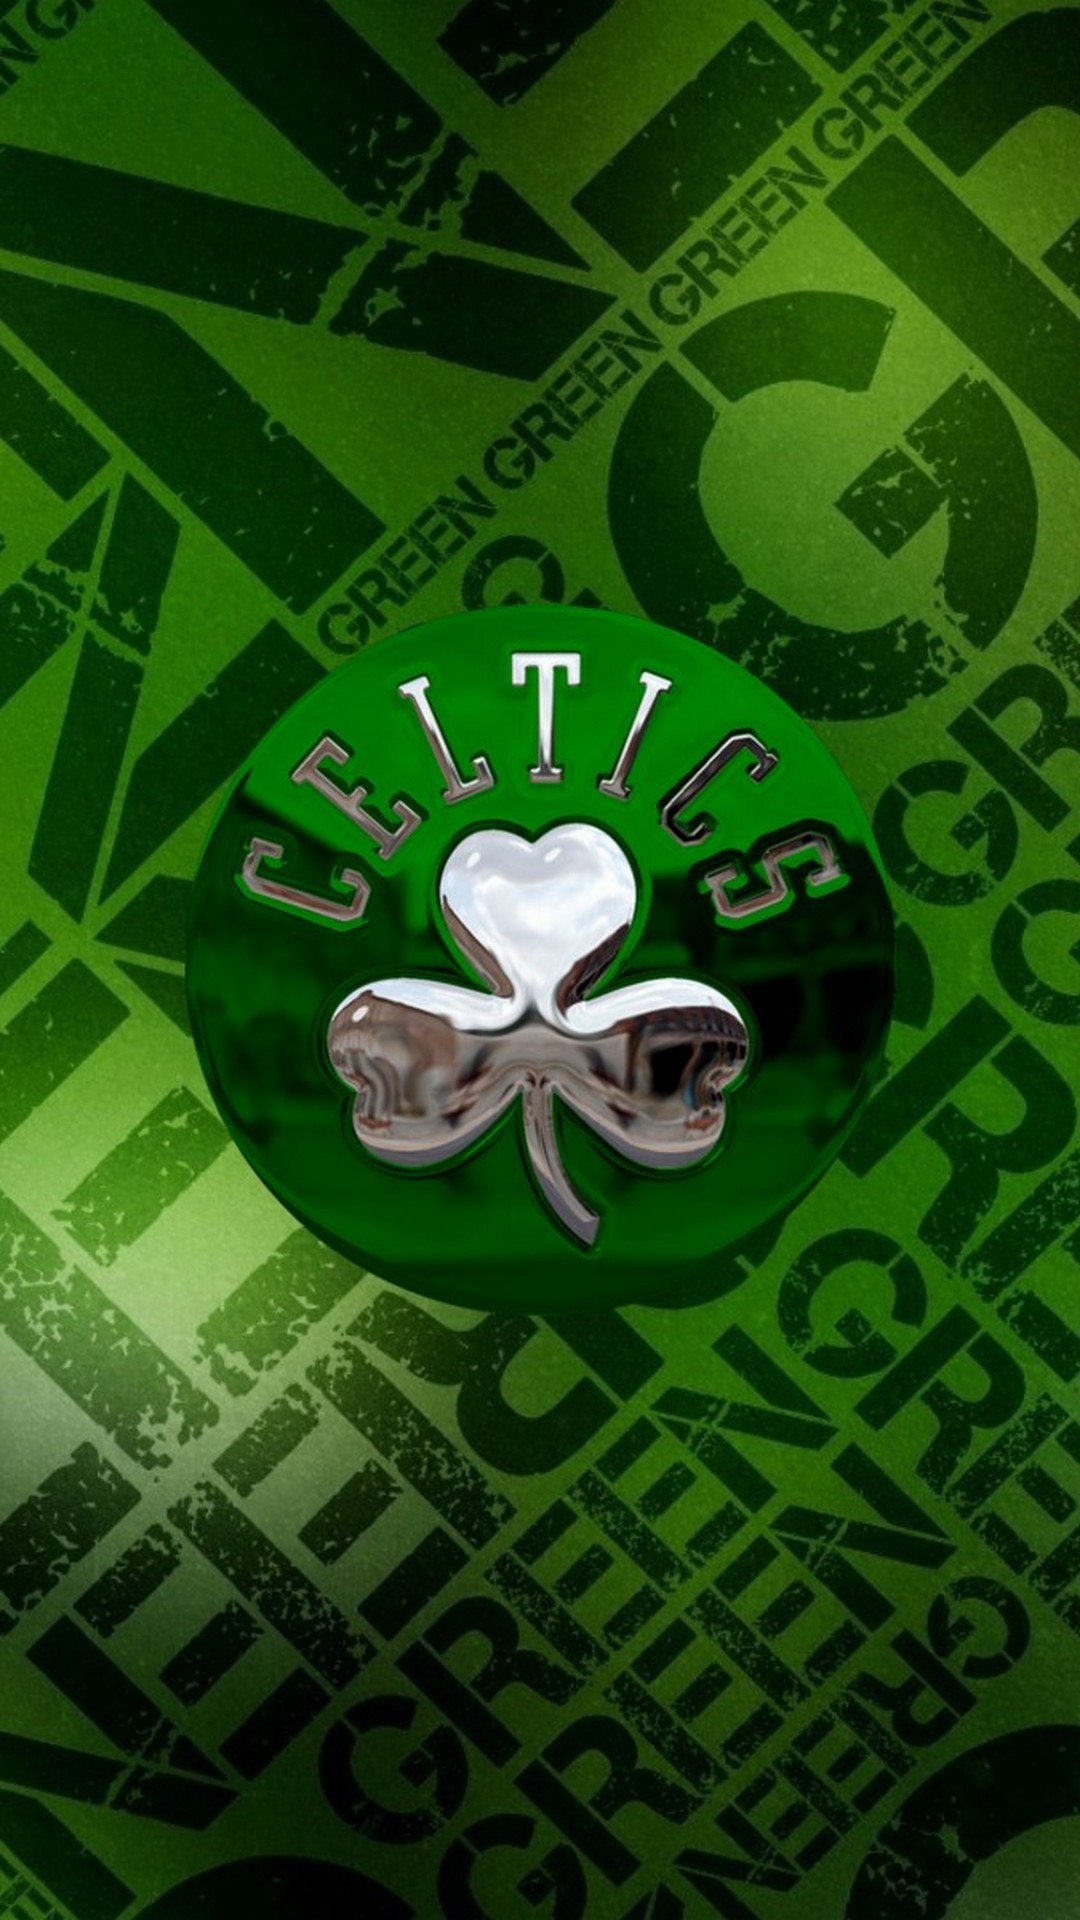 Boston Celtics Wallpaper (best Boston Celtics Wallpaper and image) on WallpaperChat